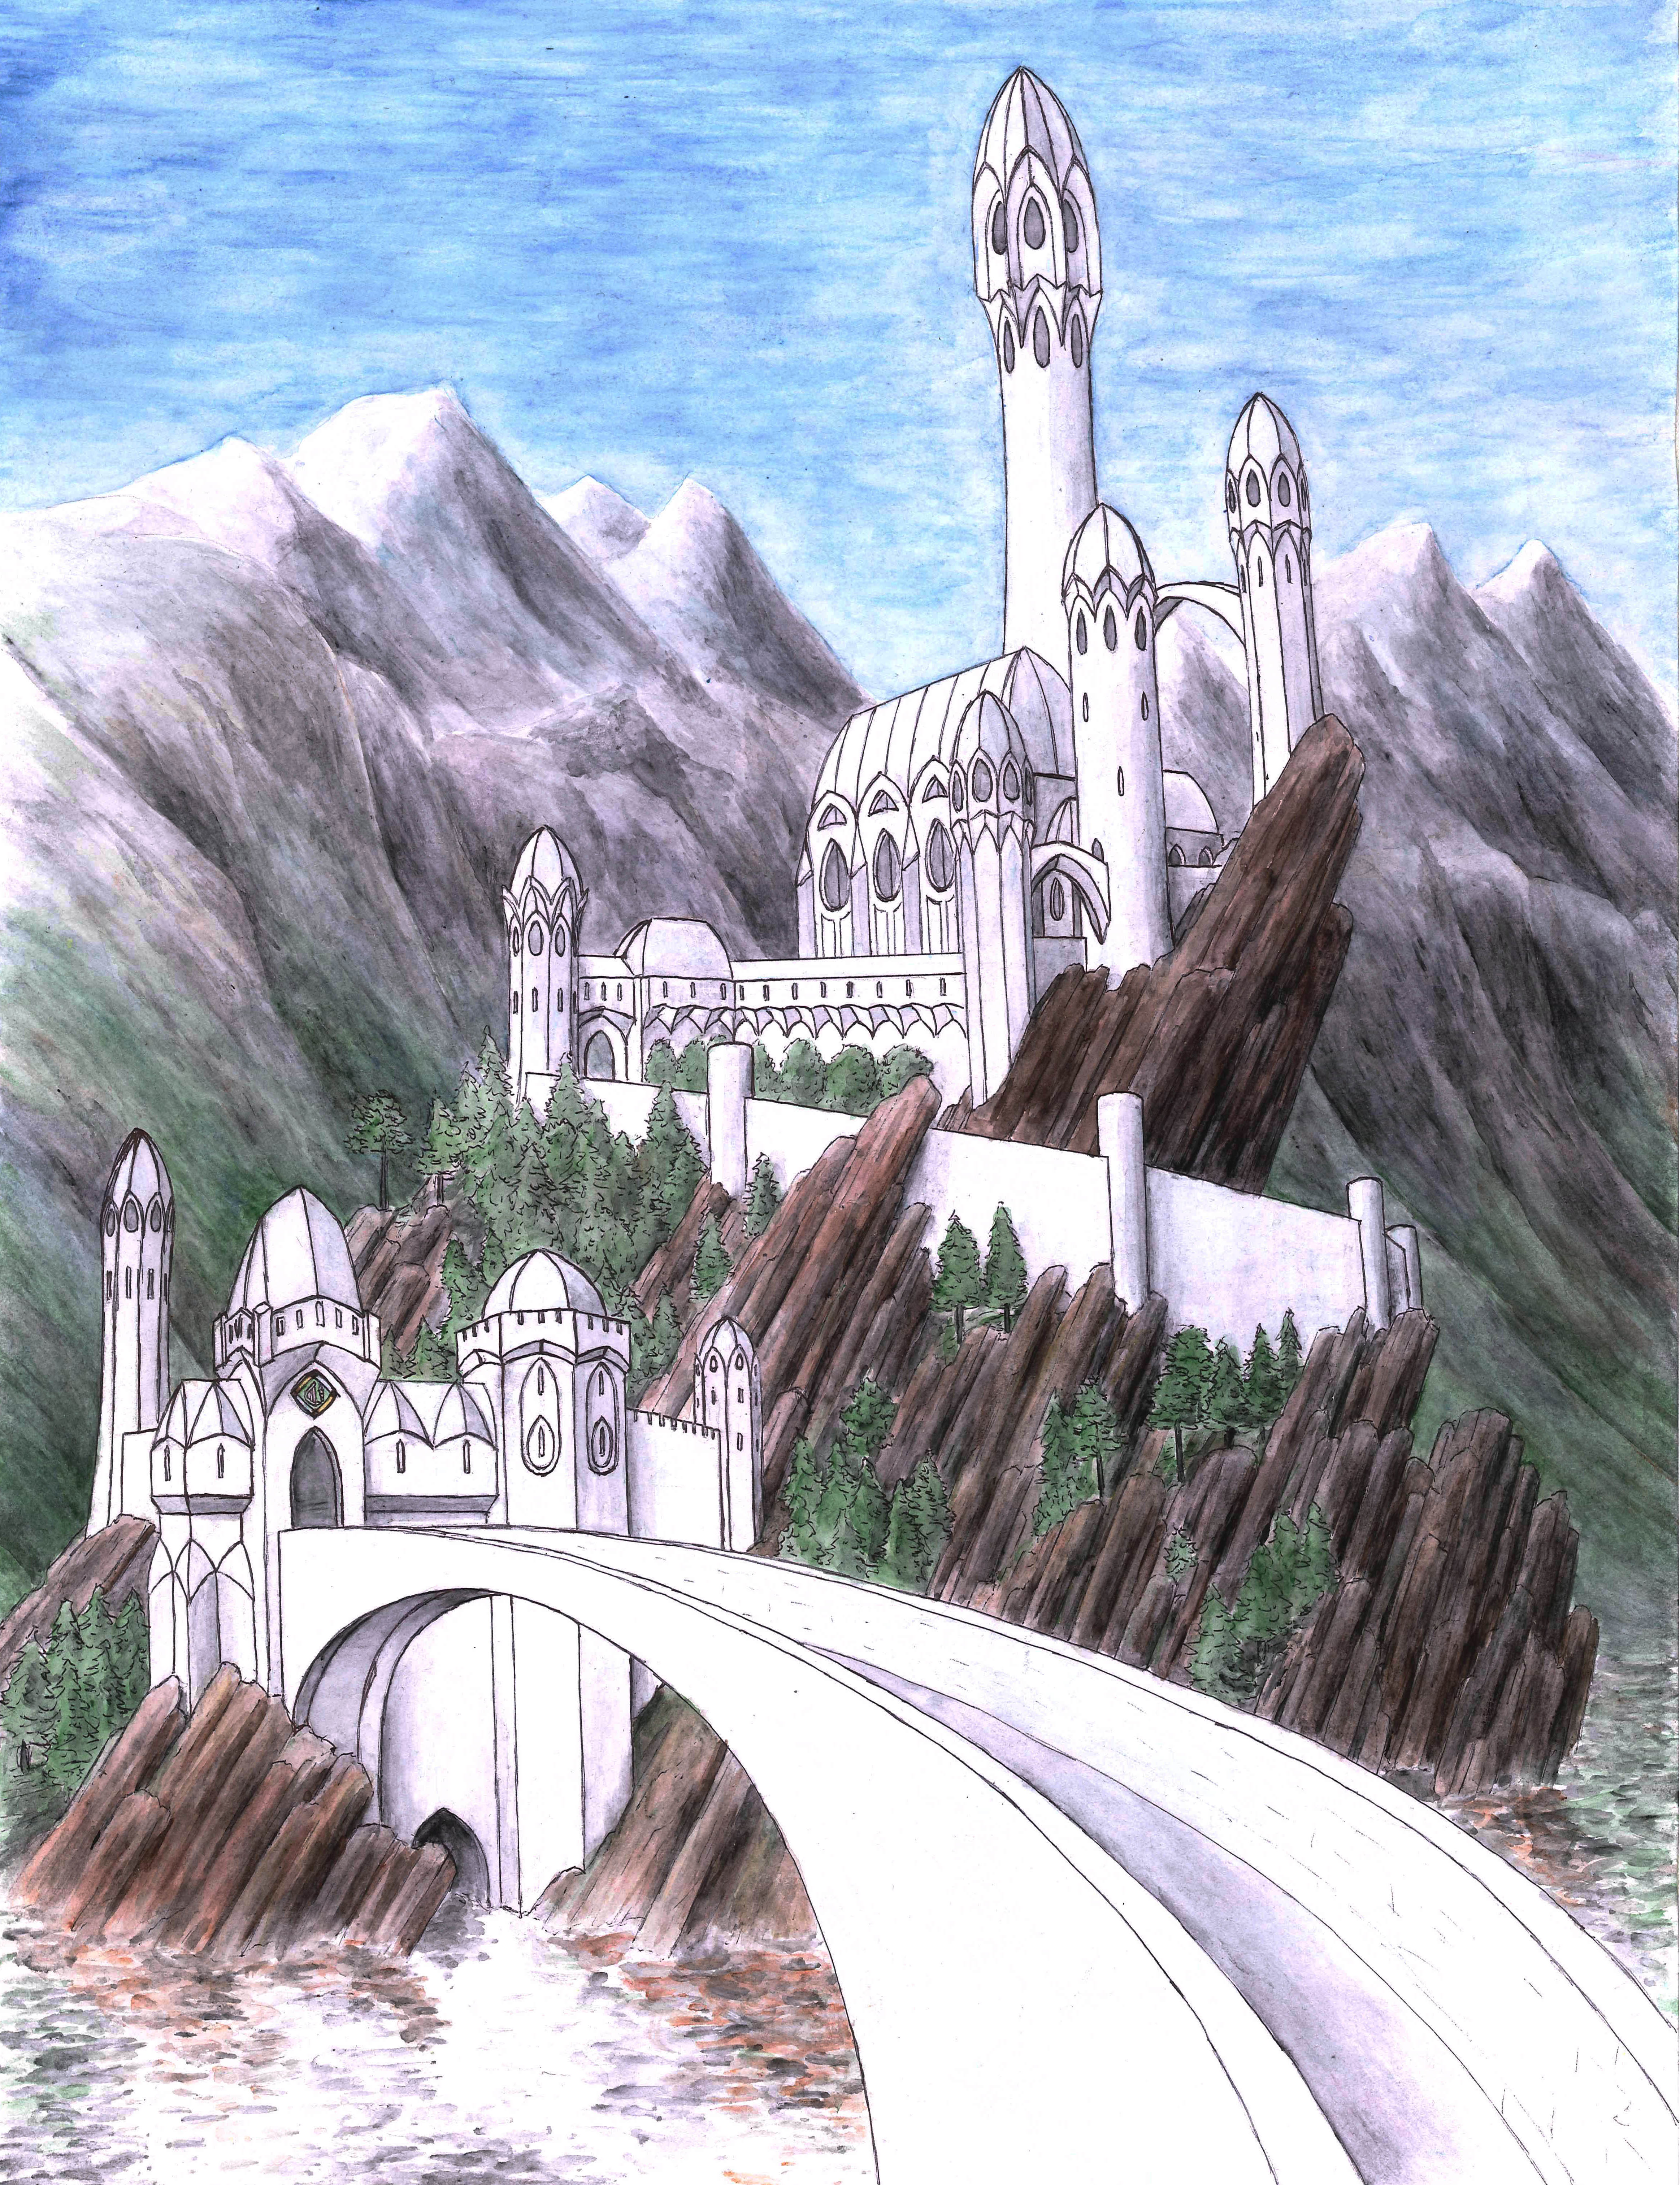 Minas Tirith (Beleriand), Tolkienpedia